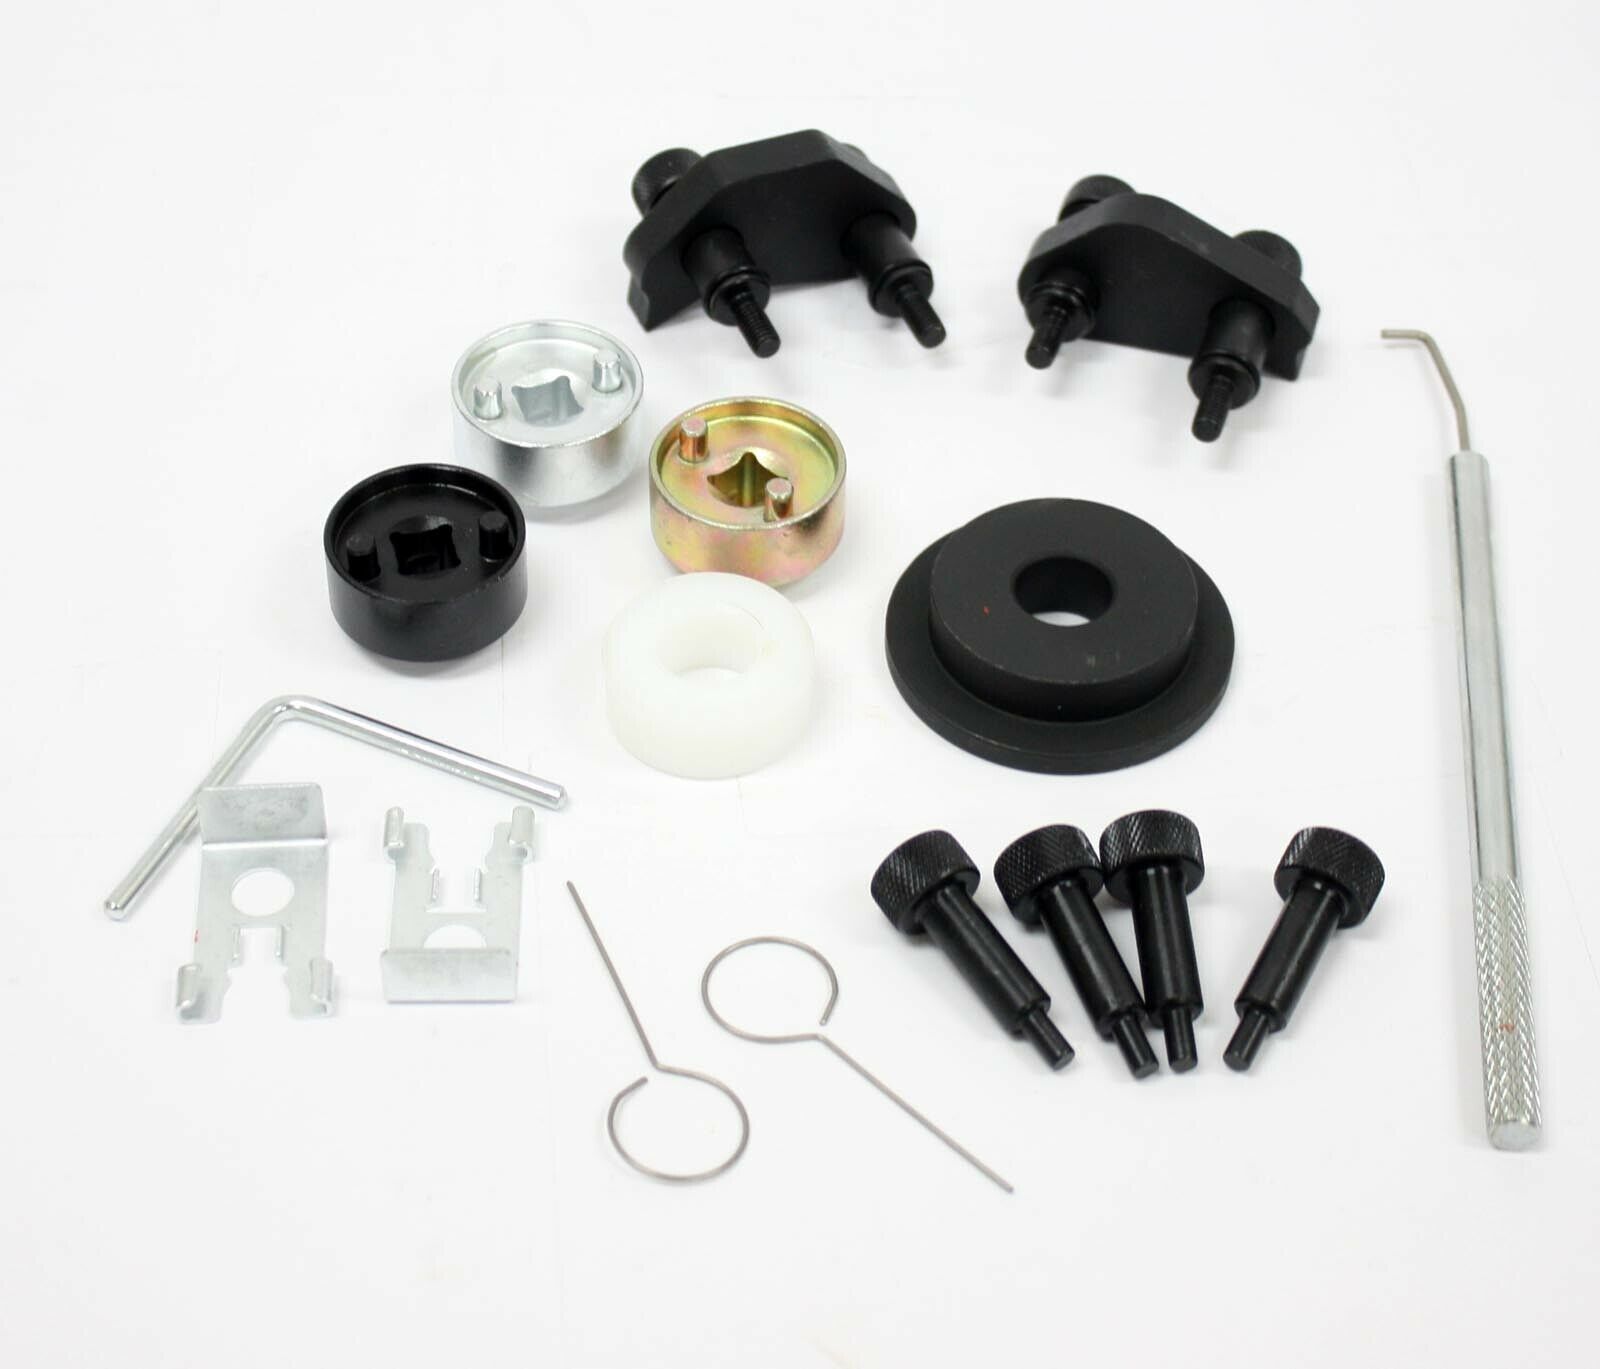 A ABIGAIL Engine Camshaft Locking Alignment Timing Tool Kit for Audi VW Skoda VAG 1.8 2.0 TFSI EA888 SF0233